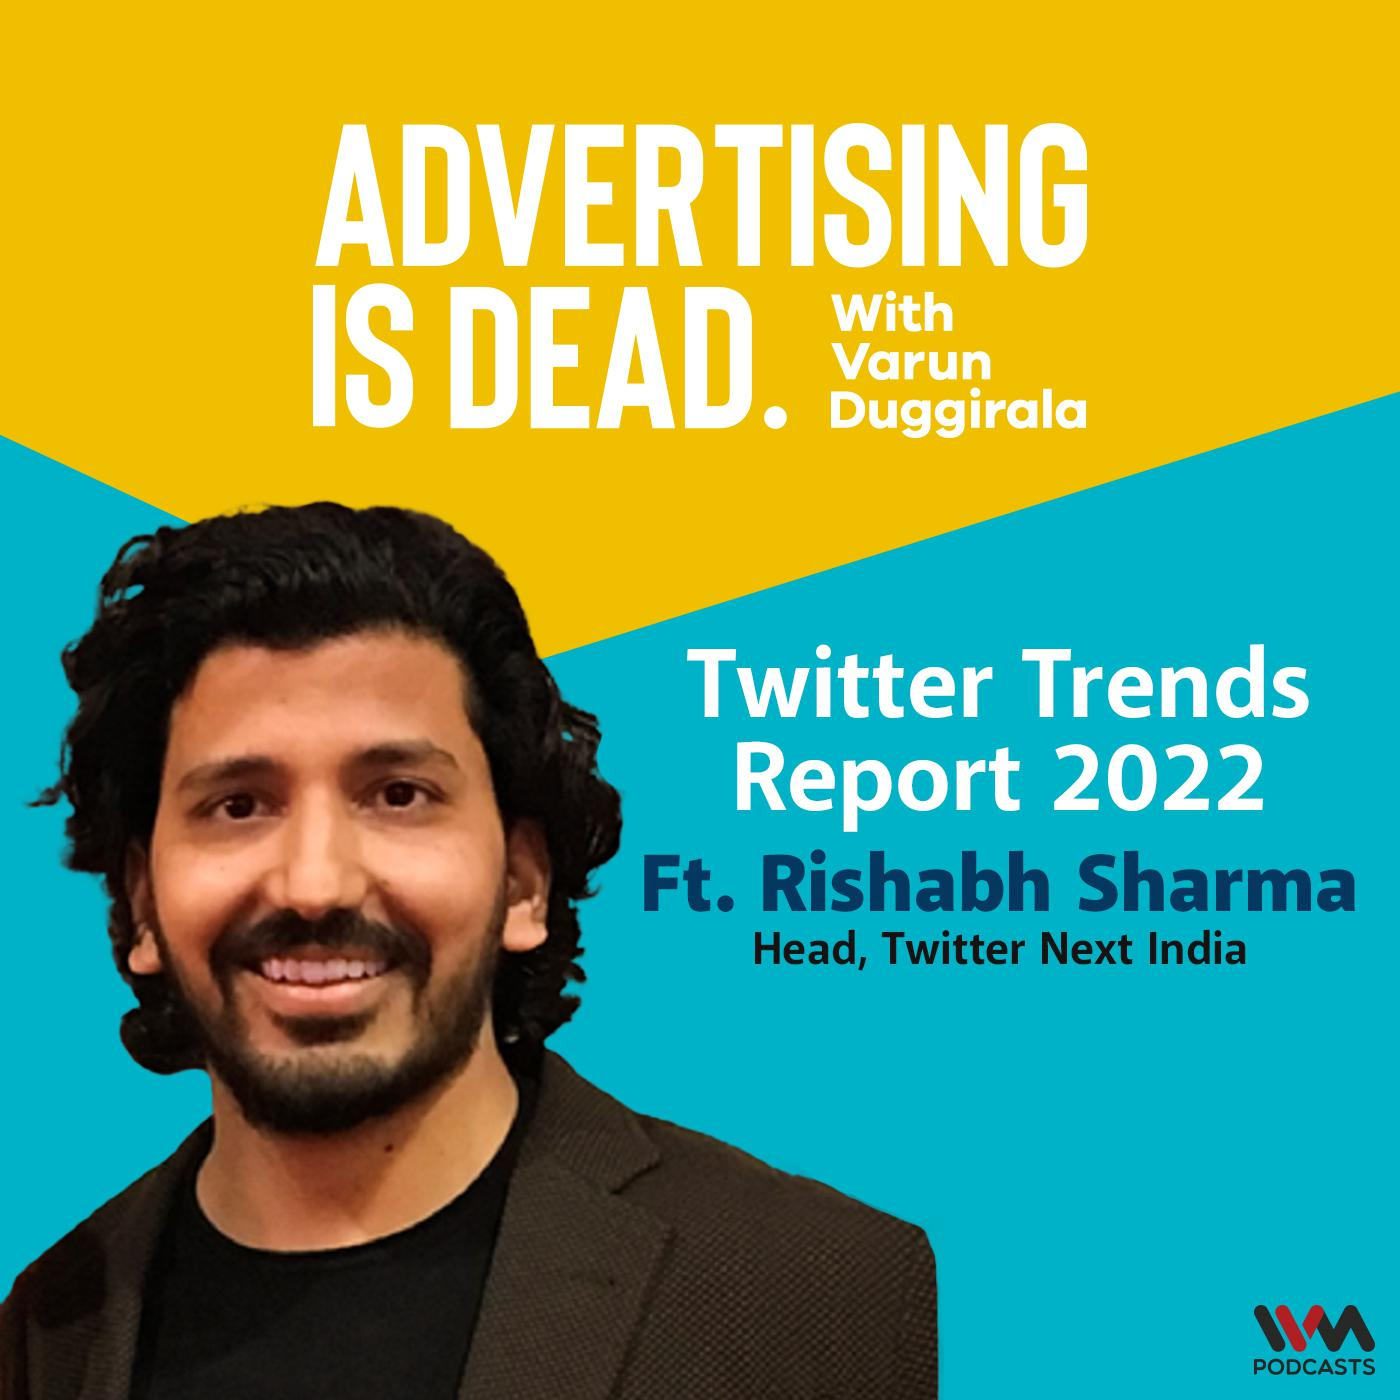 Twitter Trends Report 2022 with Rishabh Sharma